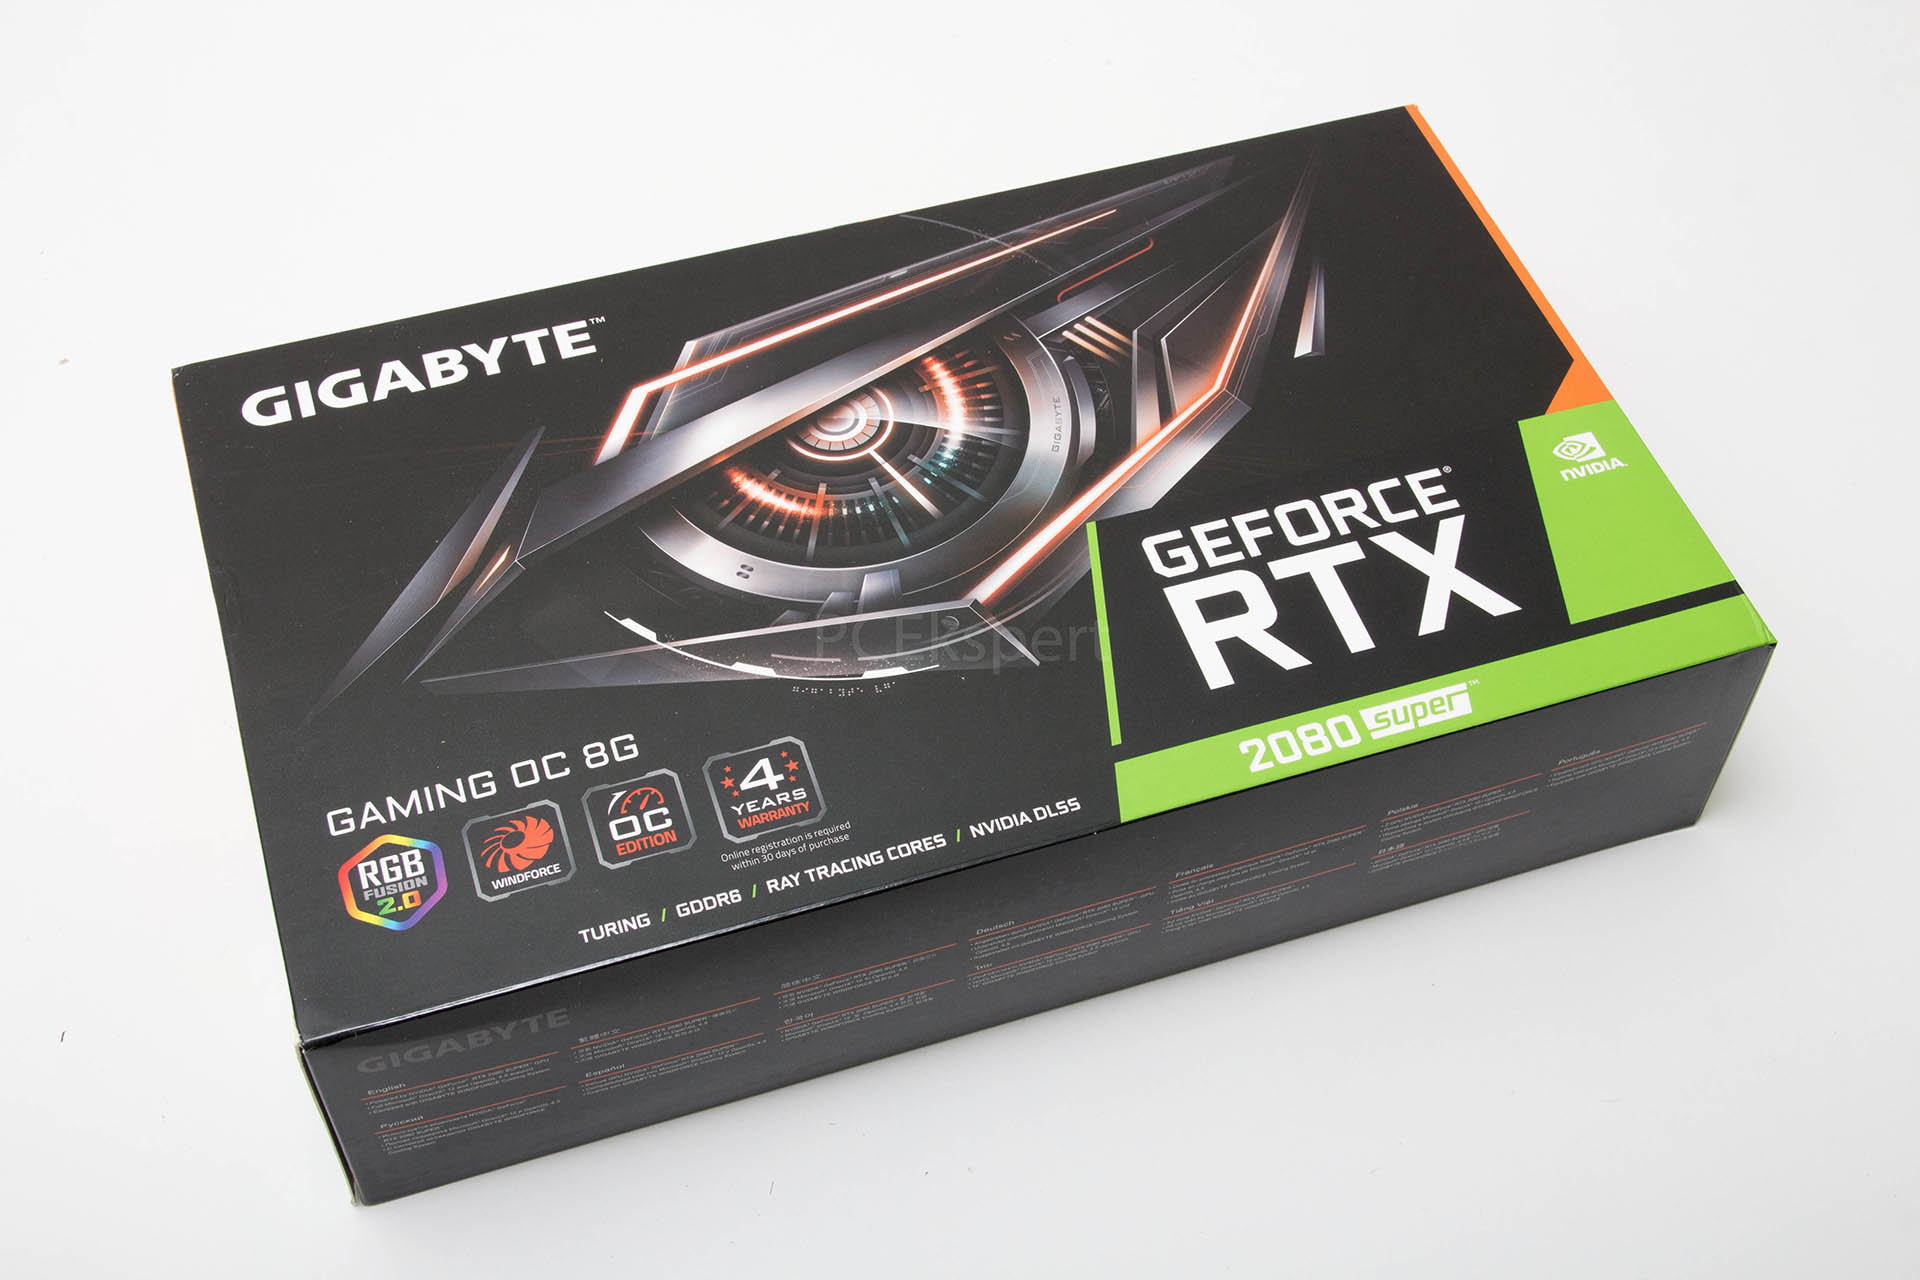 Gigabyte GeForce RTX 2080 Super Gaming OC recenzija